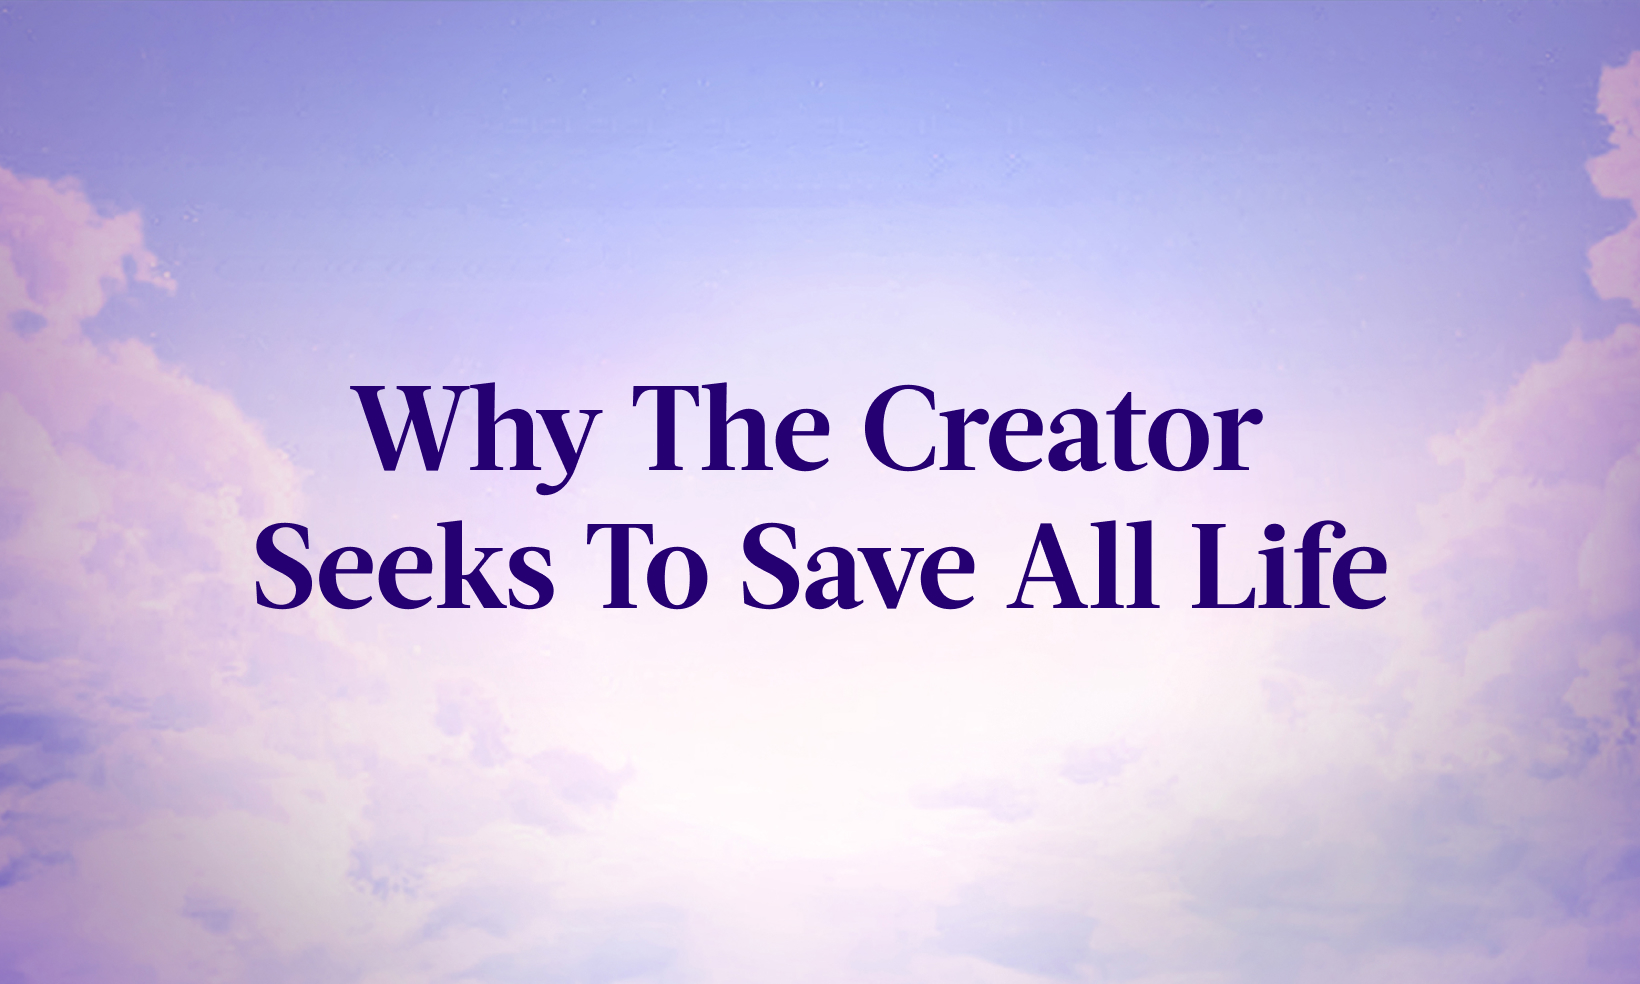 Master Li Hongzhi: Why The Creator Seeks To Save All Life